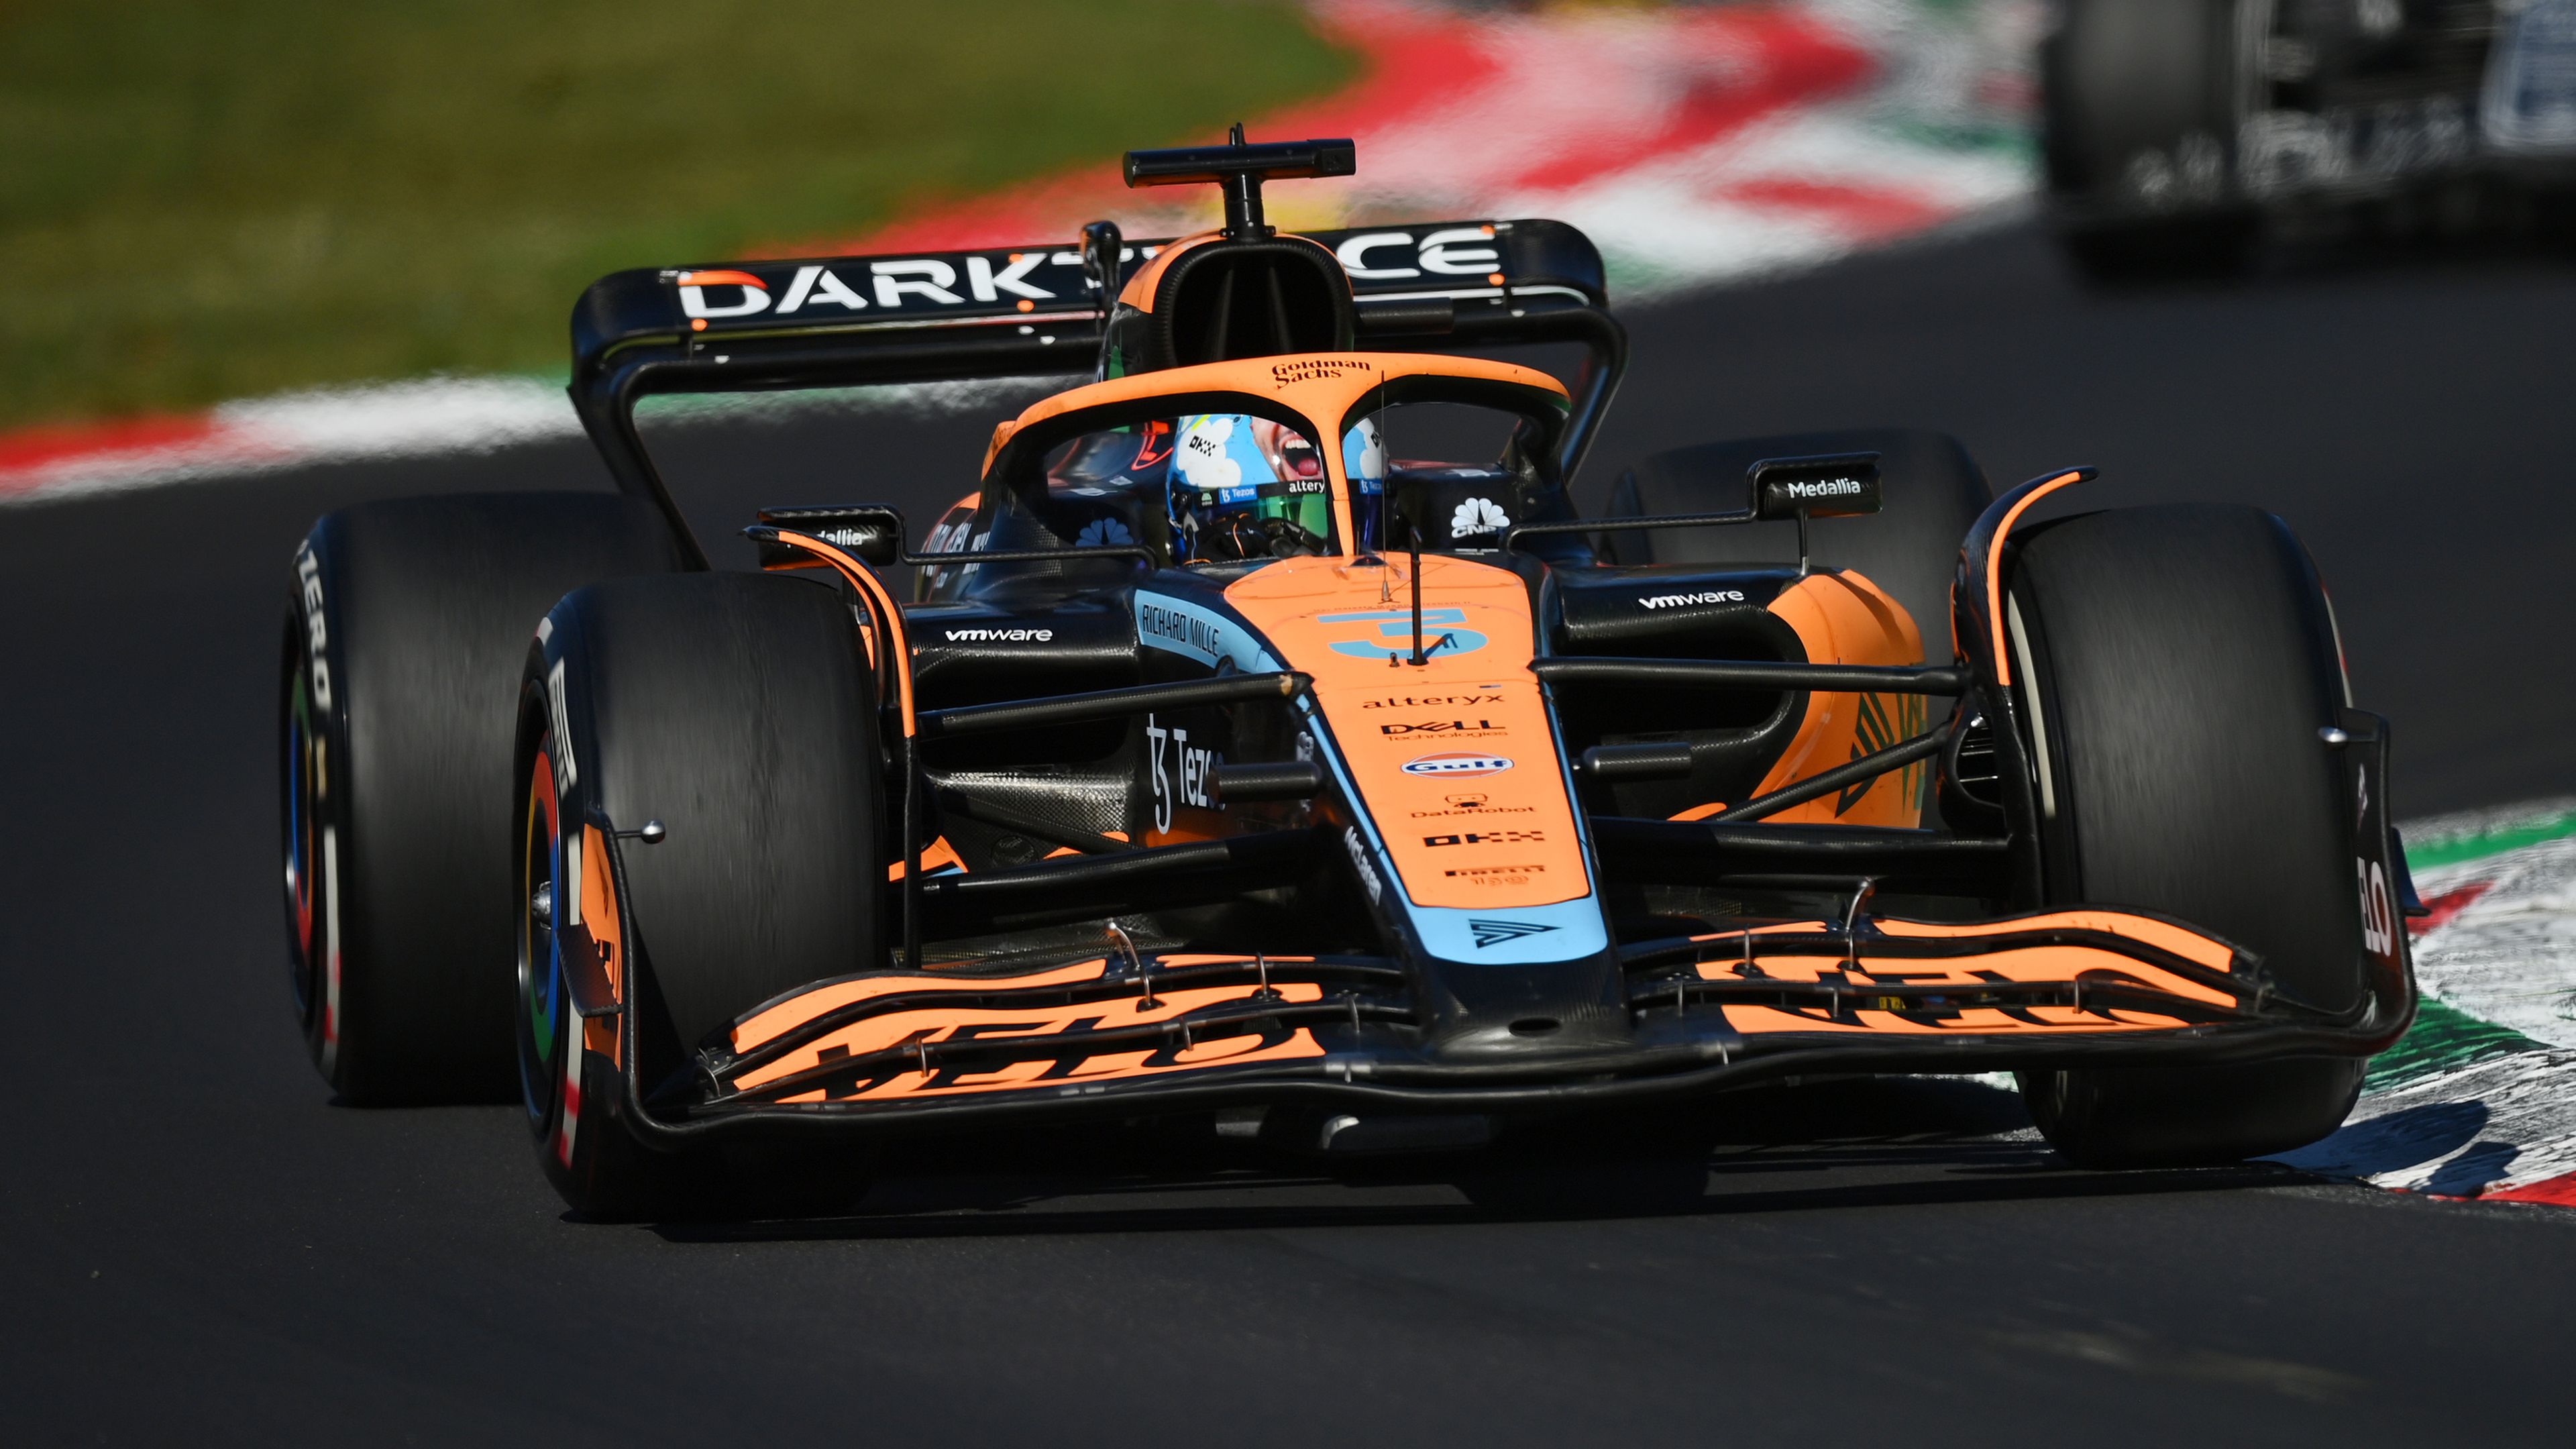 Stunning McLaren one-two at Monza